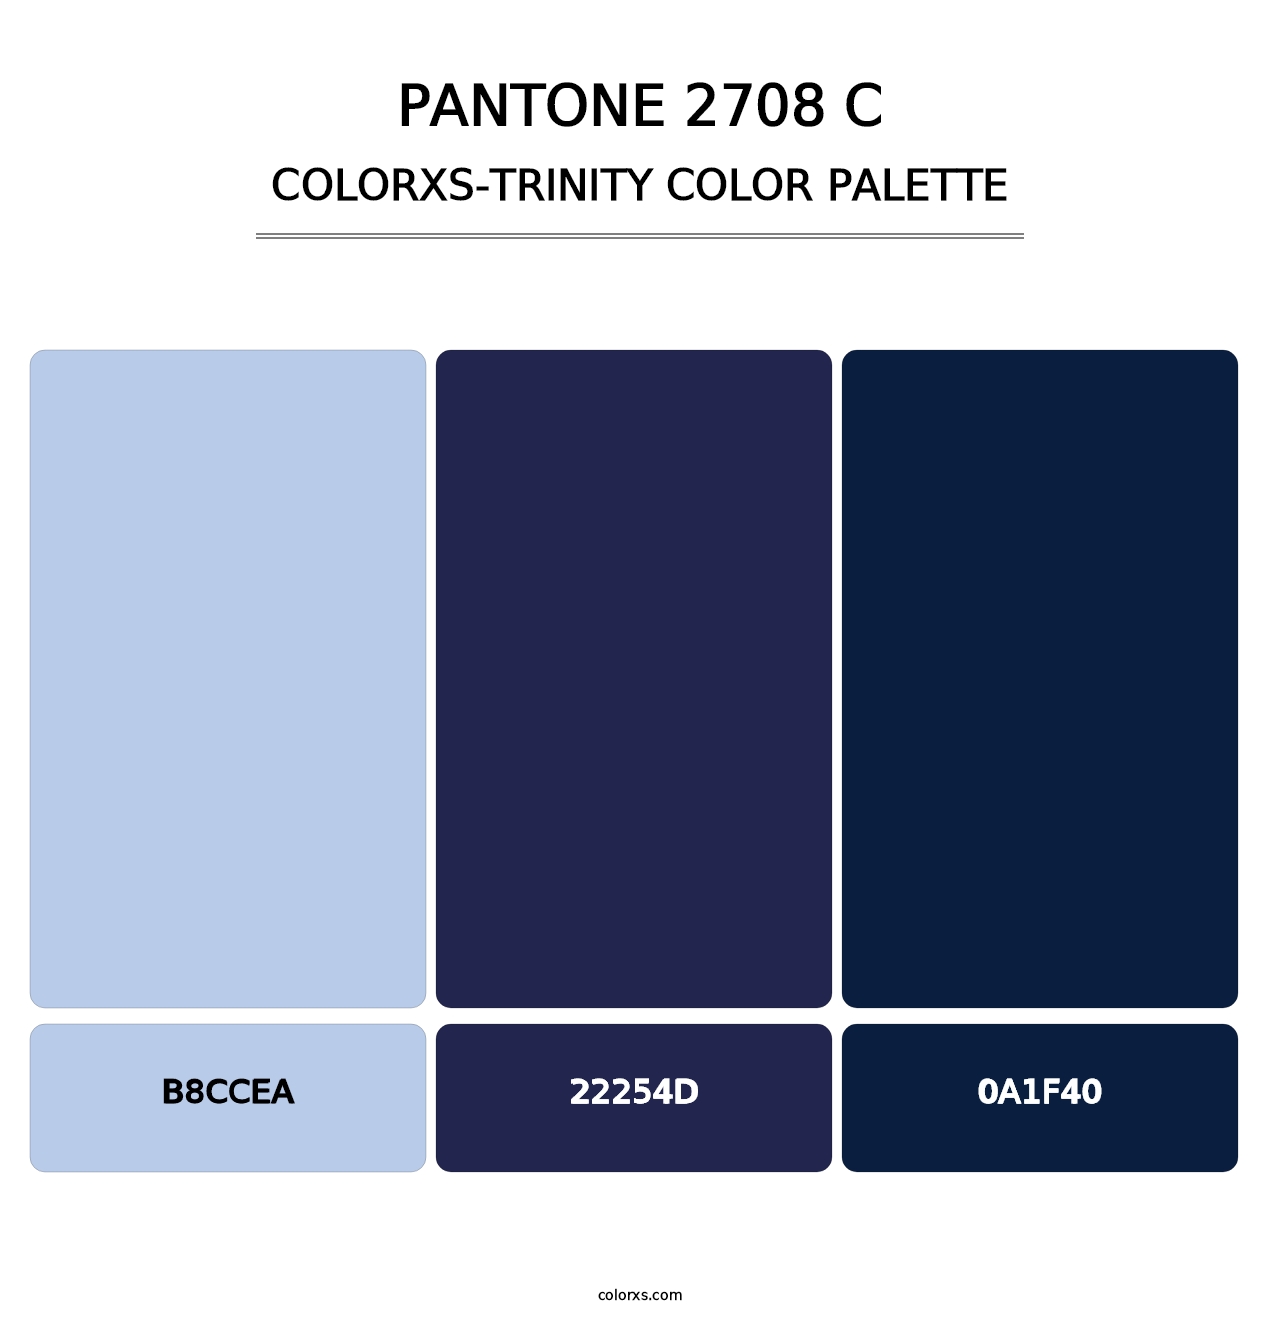 PANTONE 2708 C - Colorxs Trinity Palette